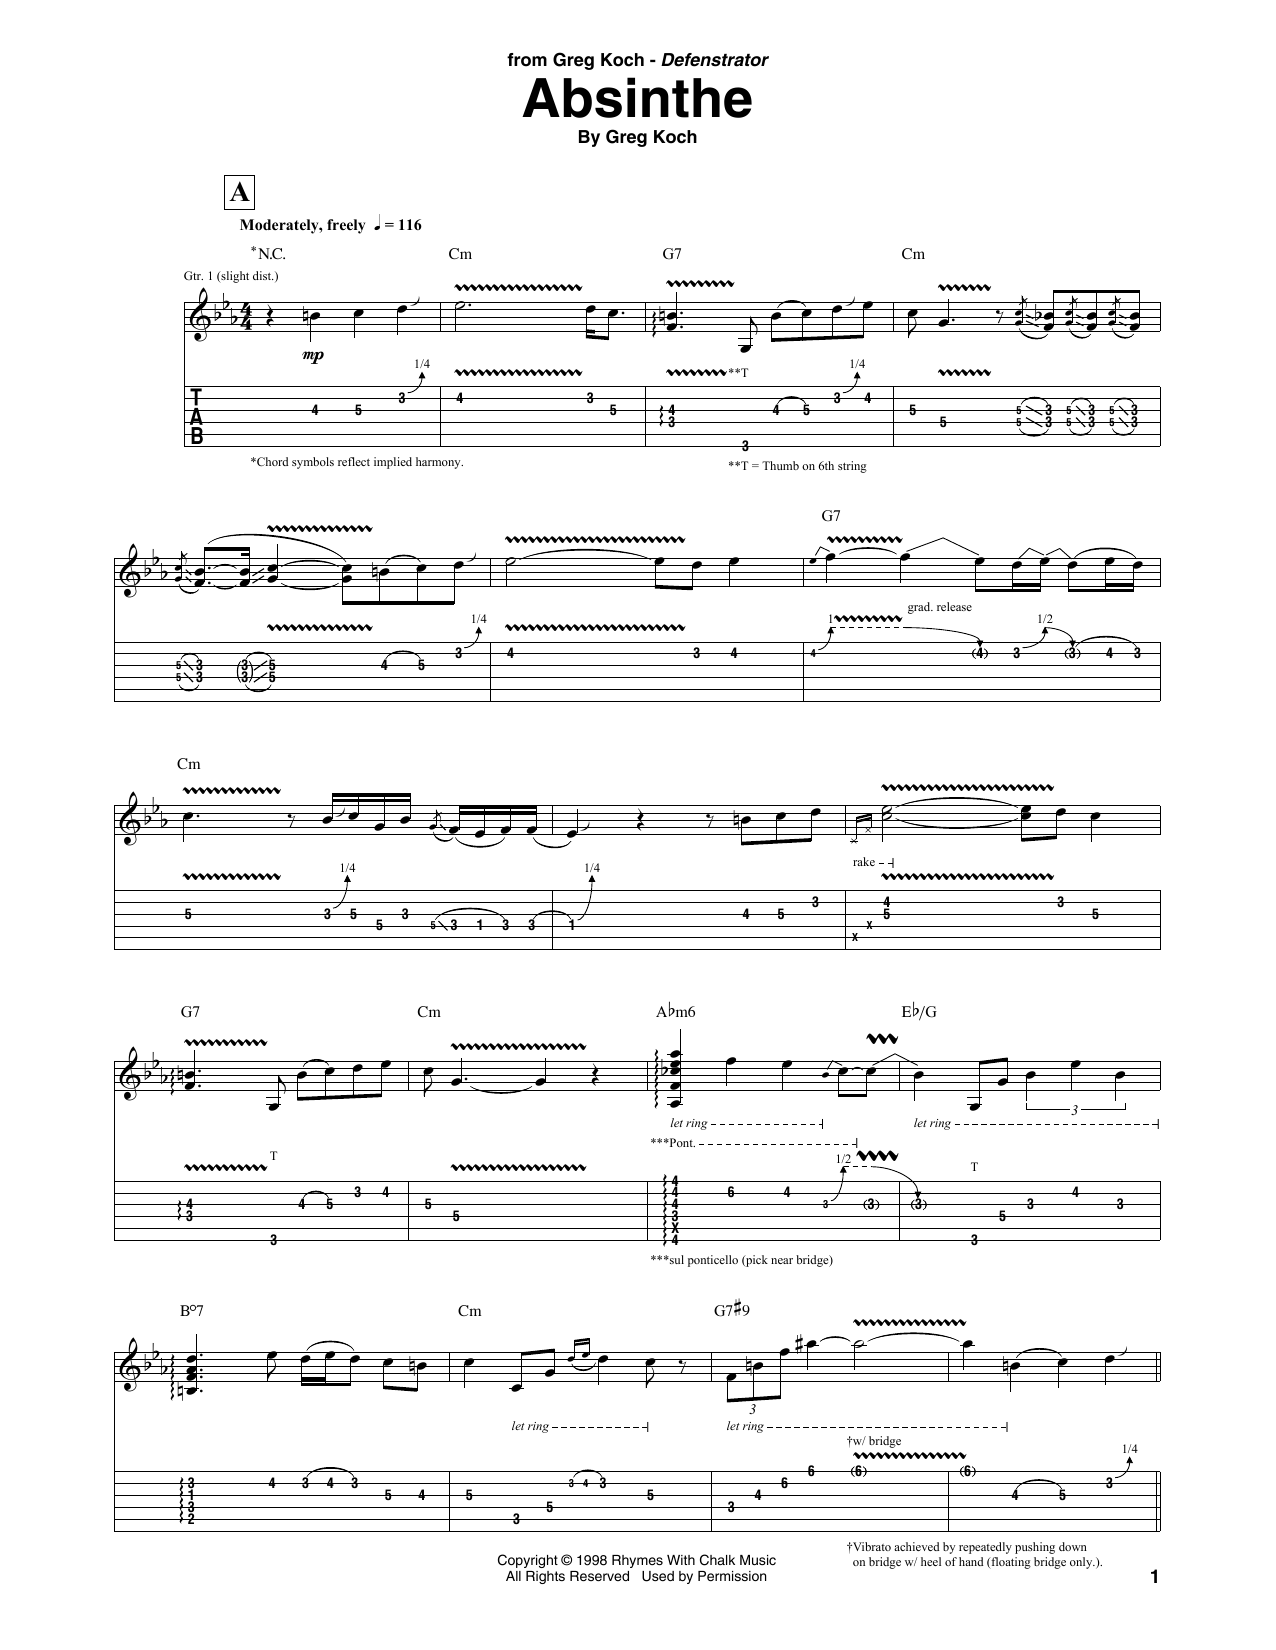 Greg Koch Absinthe Sheet Music Notes & Chords for Guitar Tab - Download or Print PDF